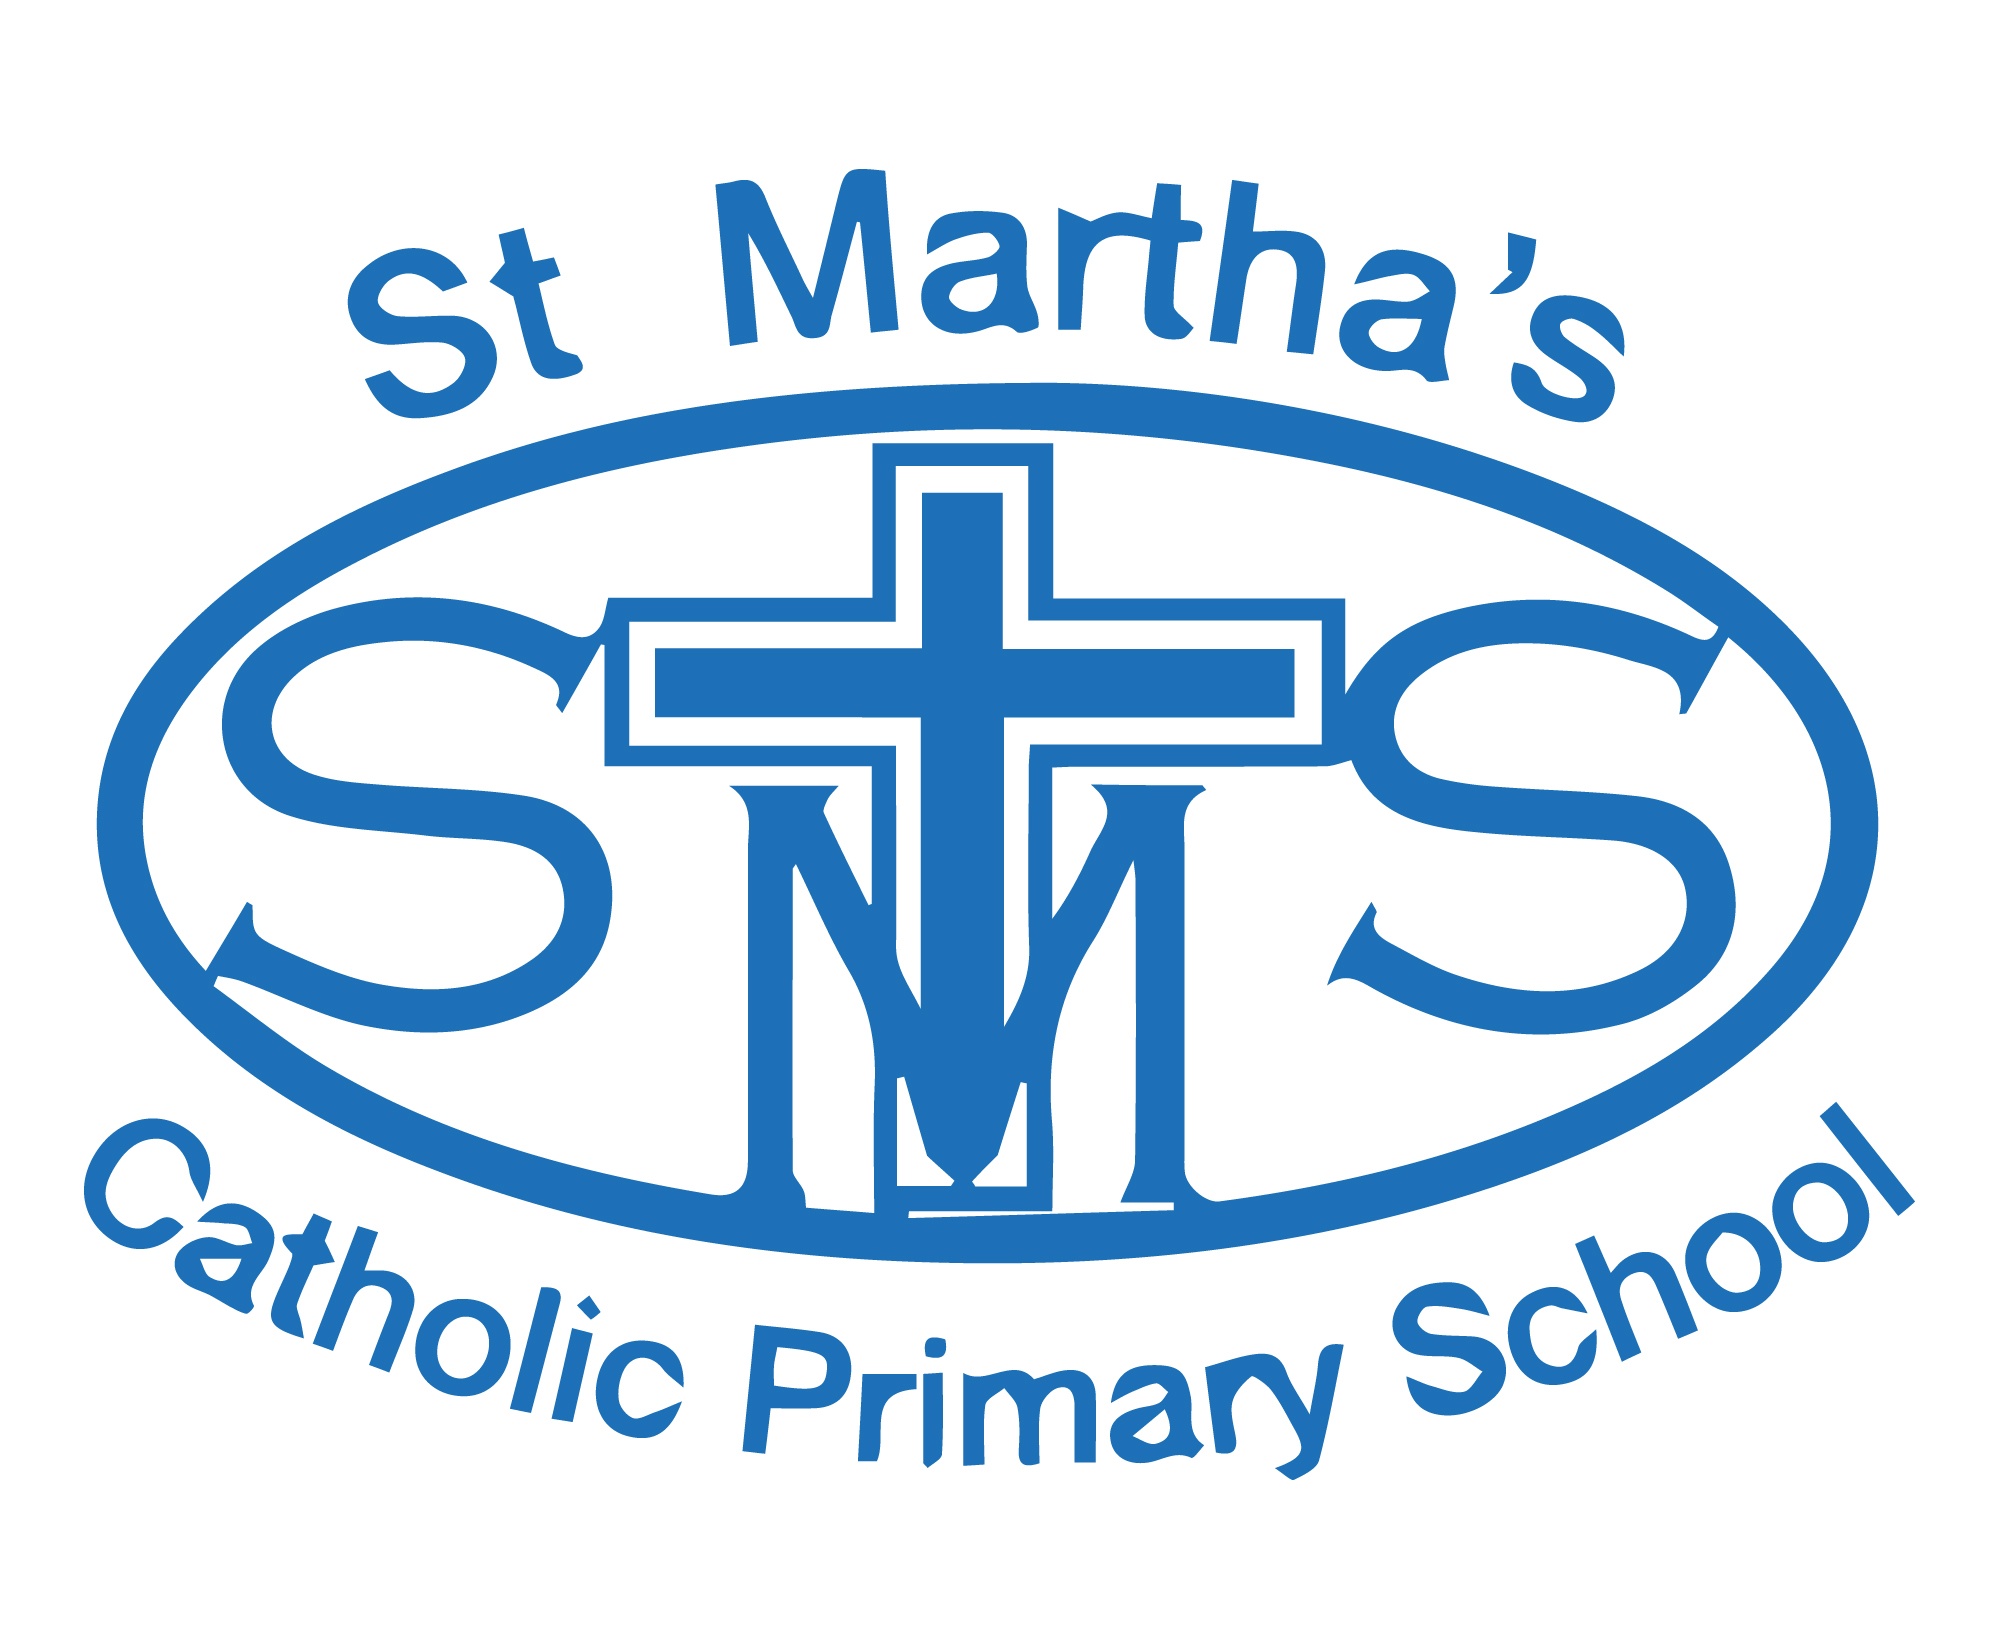 St Martha's Catholic Primary School